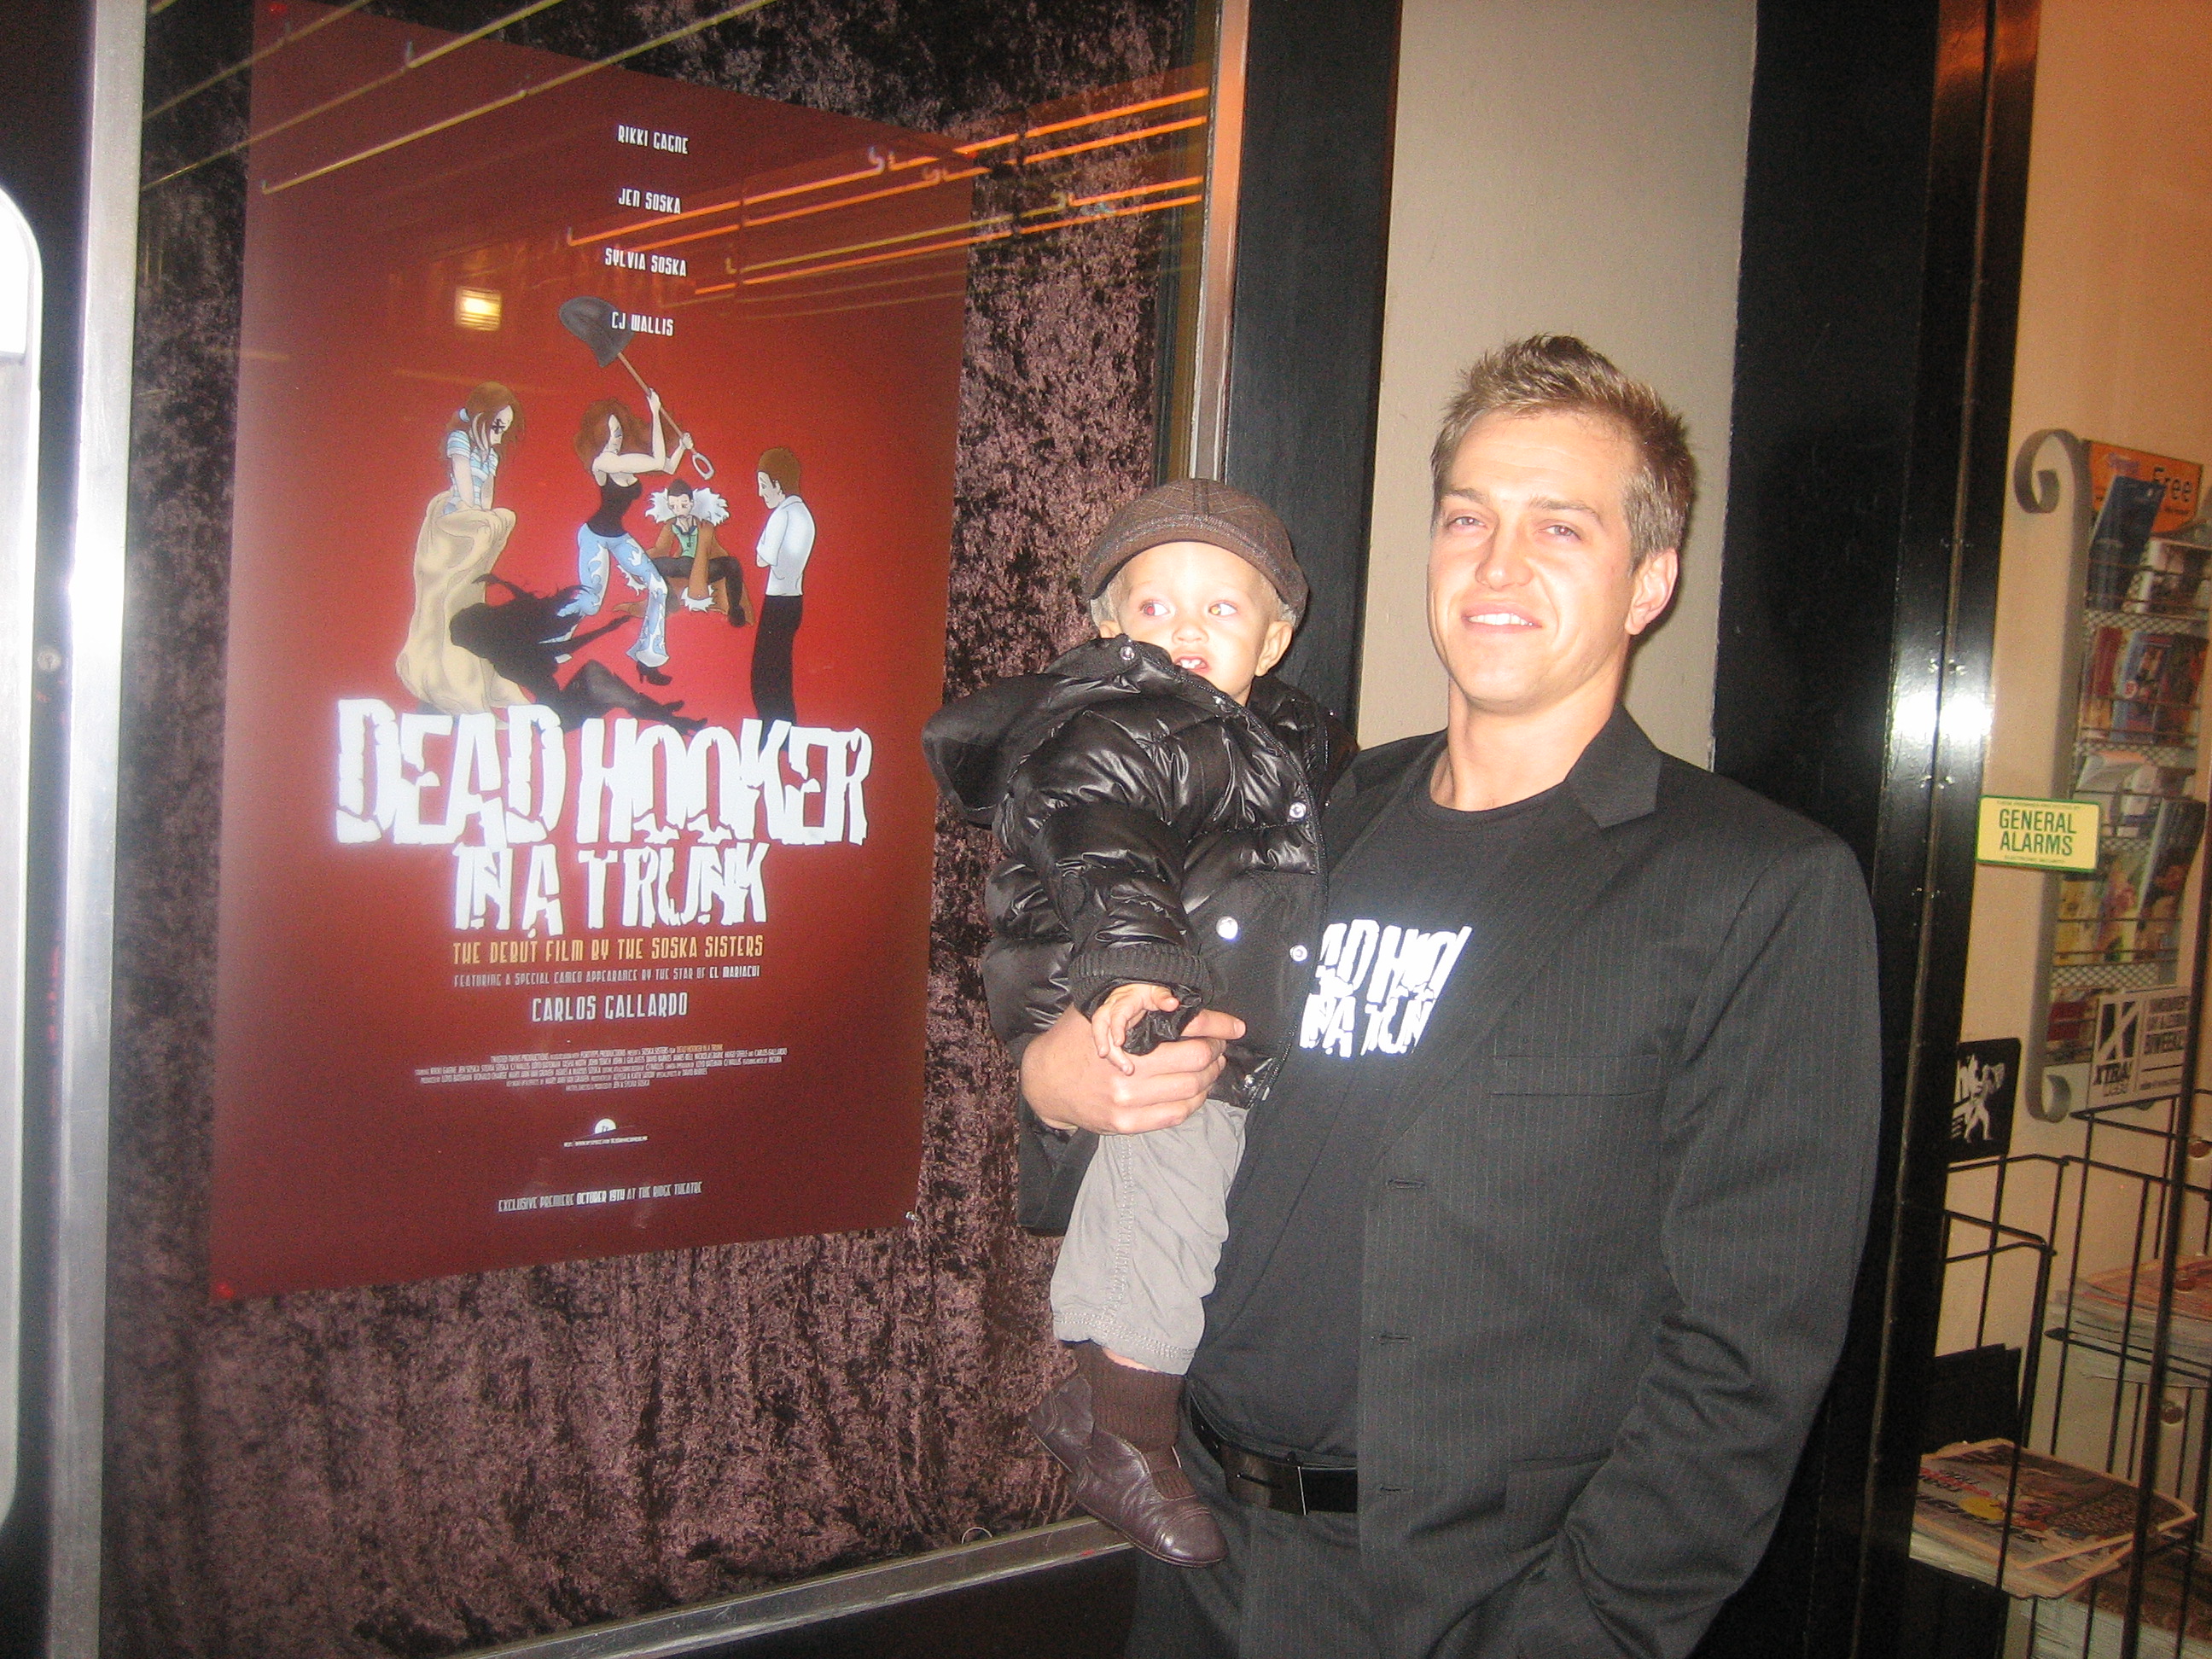 Dead Hooker in The Trunk premier with son, Caden.